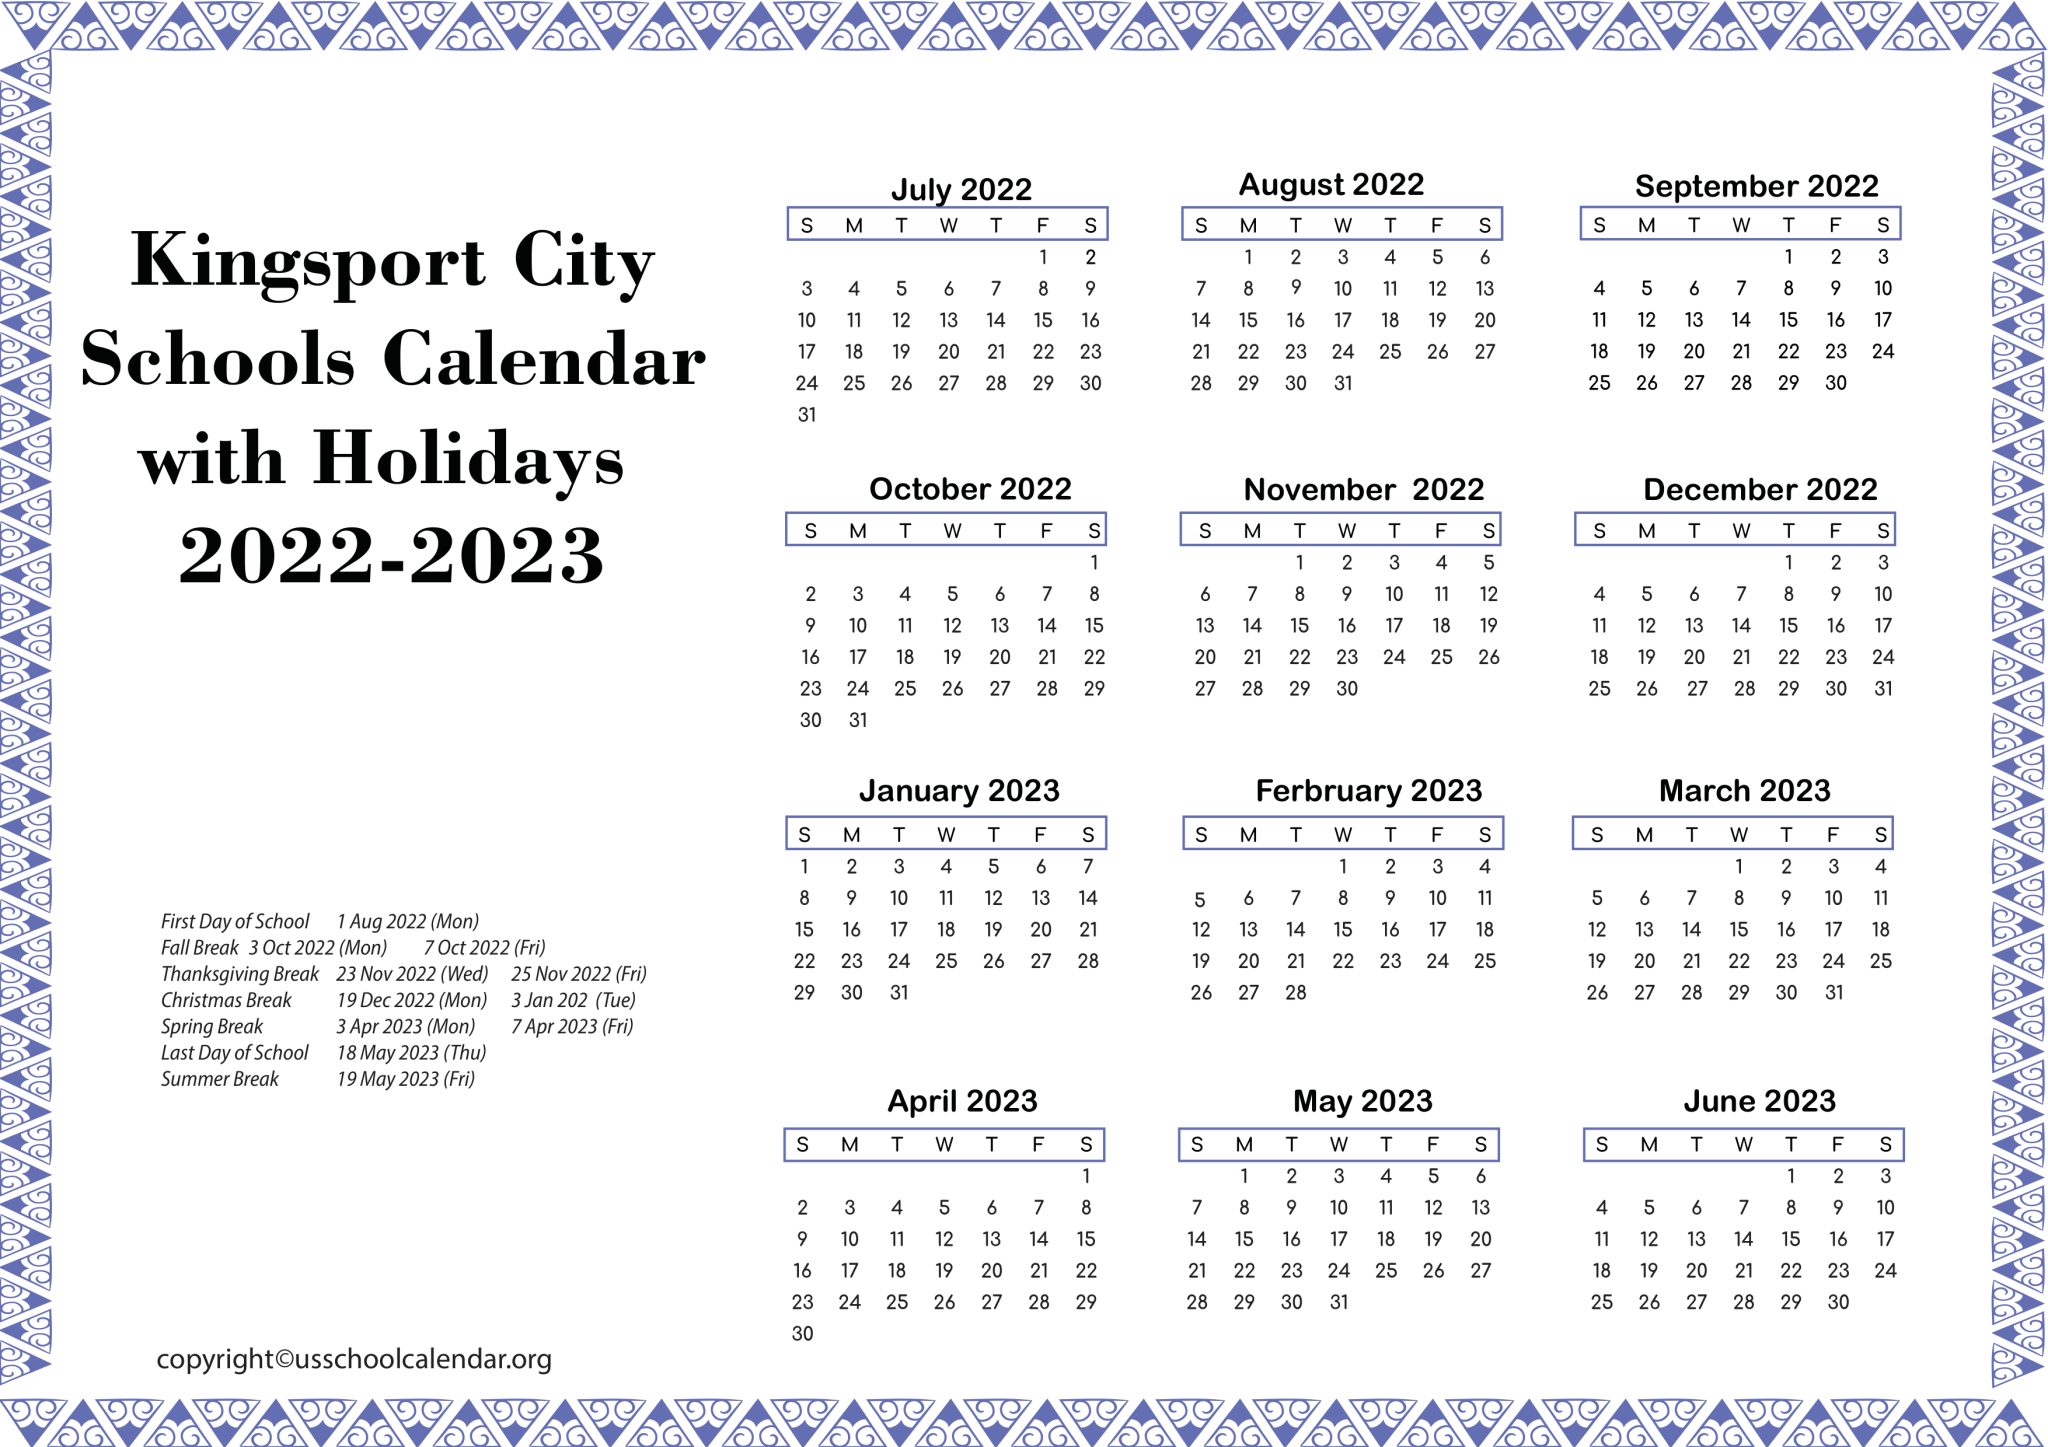 kingsport-city-schools-calendar-2023-us-school-calendar